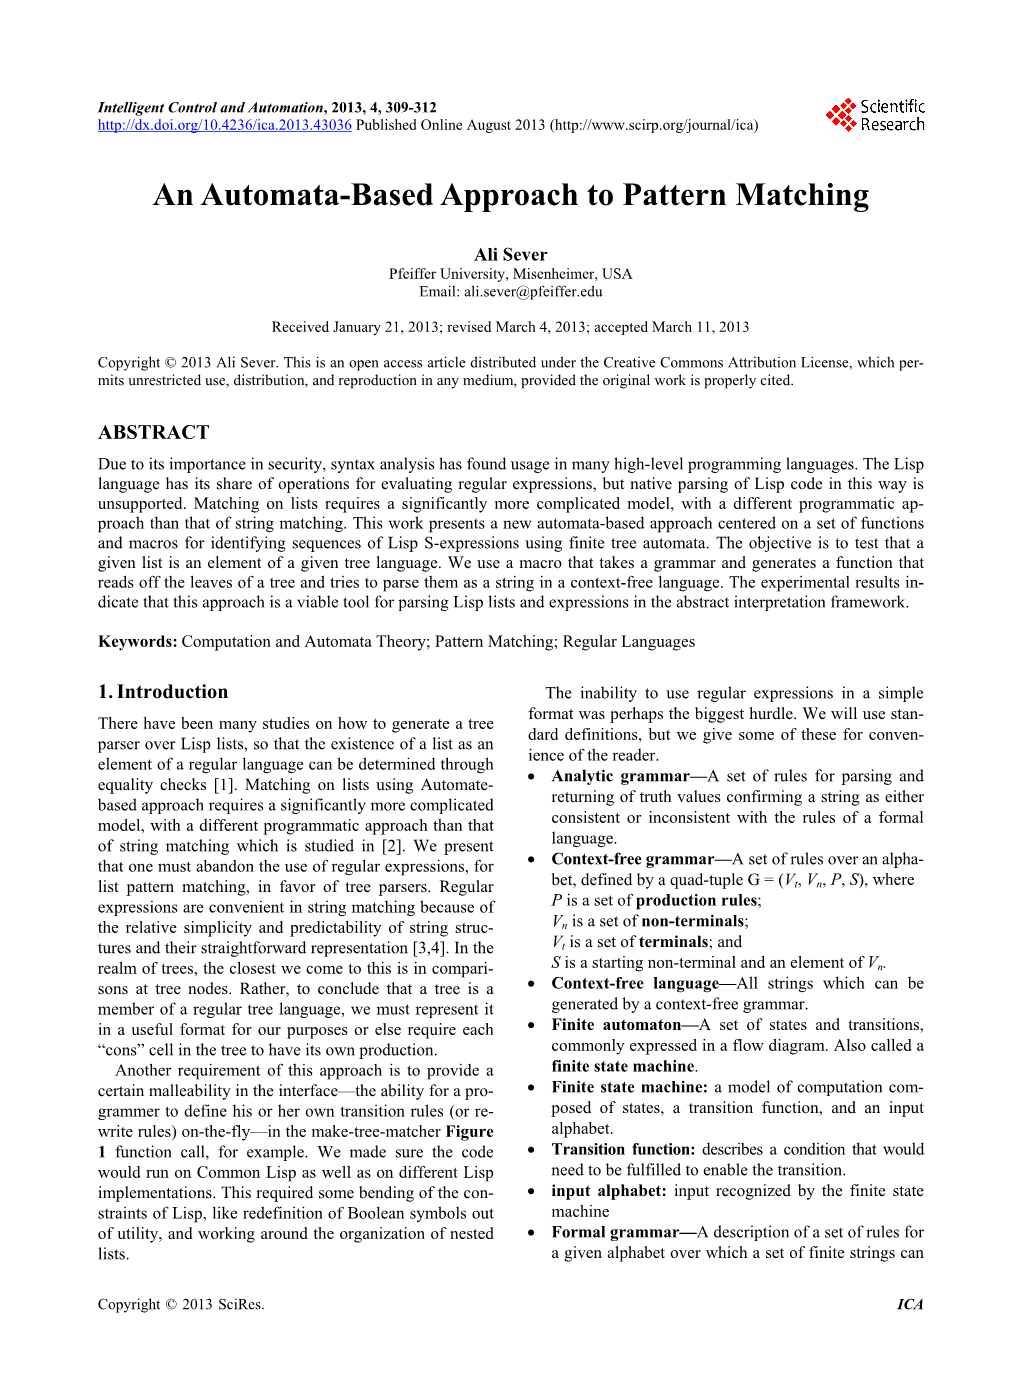 An Automata-Based Approach to Pattern Matching